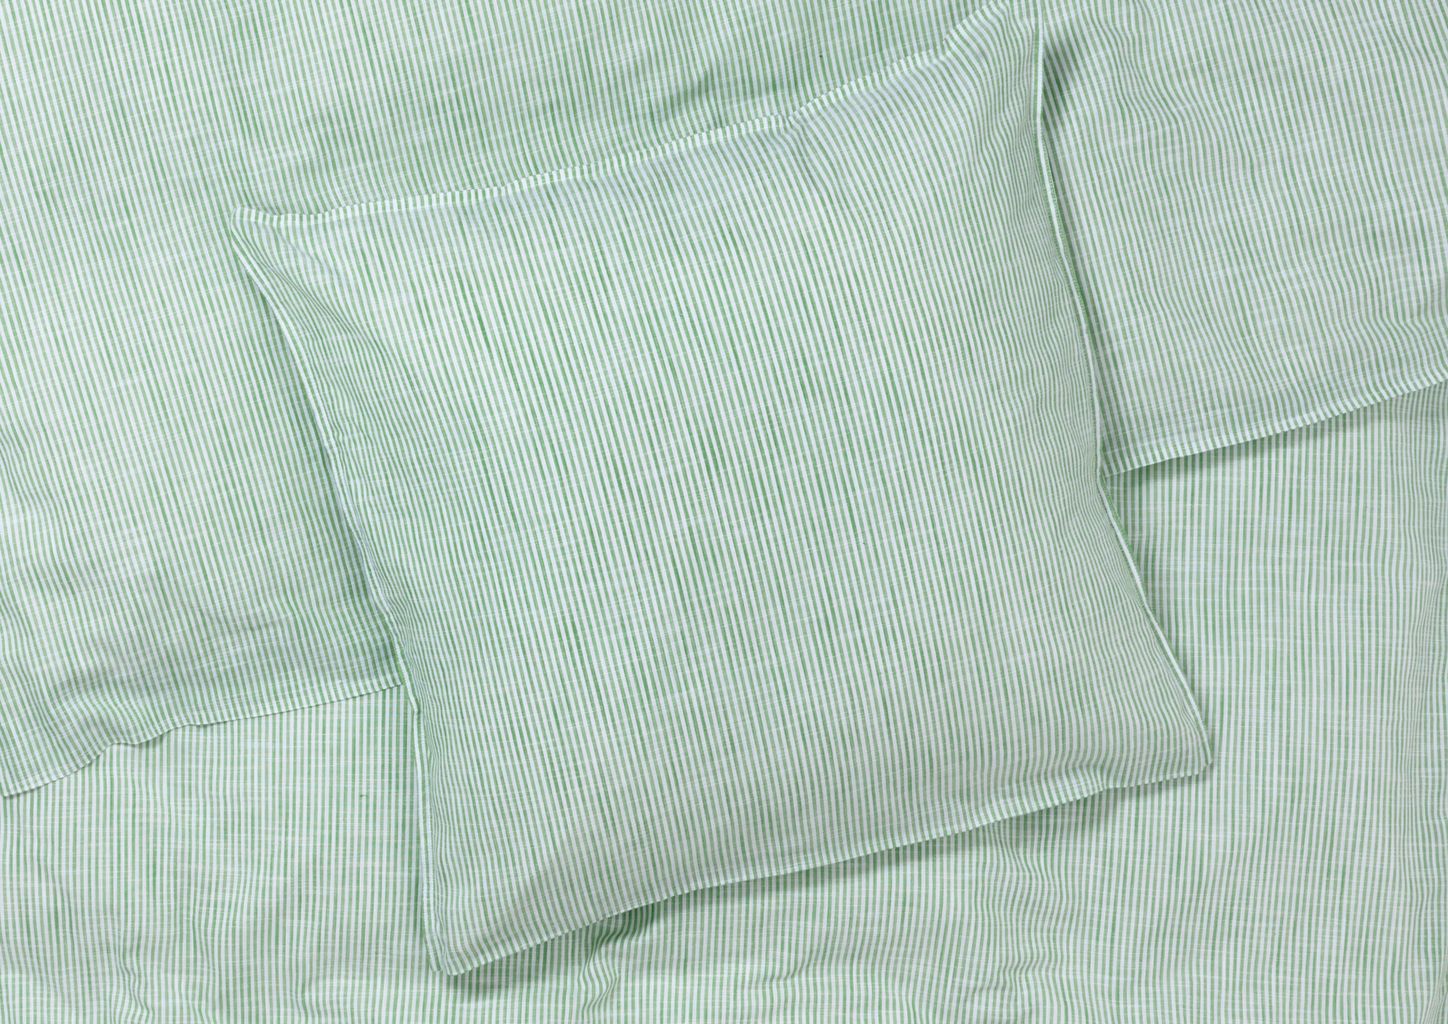 Juna Monochrome Lines Bed Linen 200 X220 Cm, Green/White